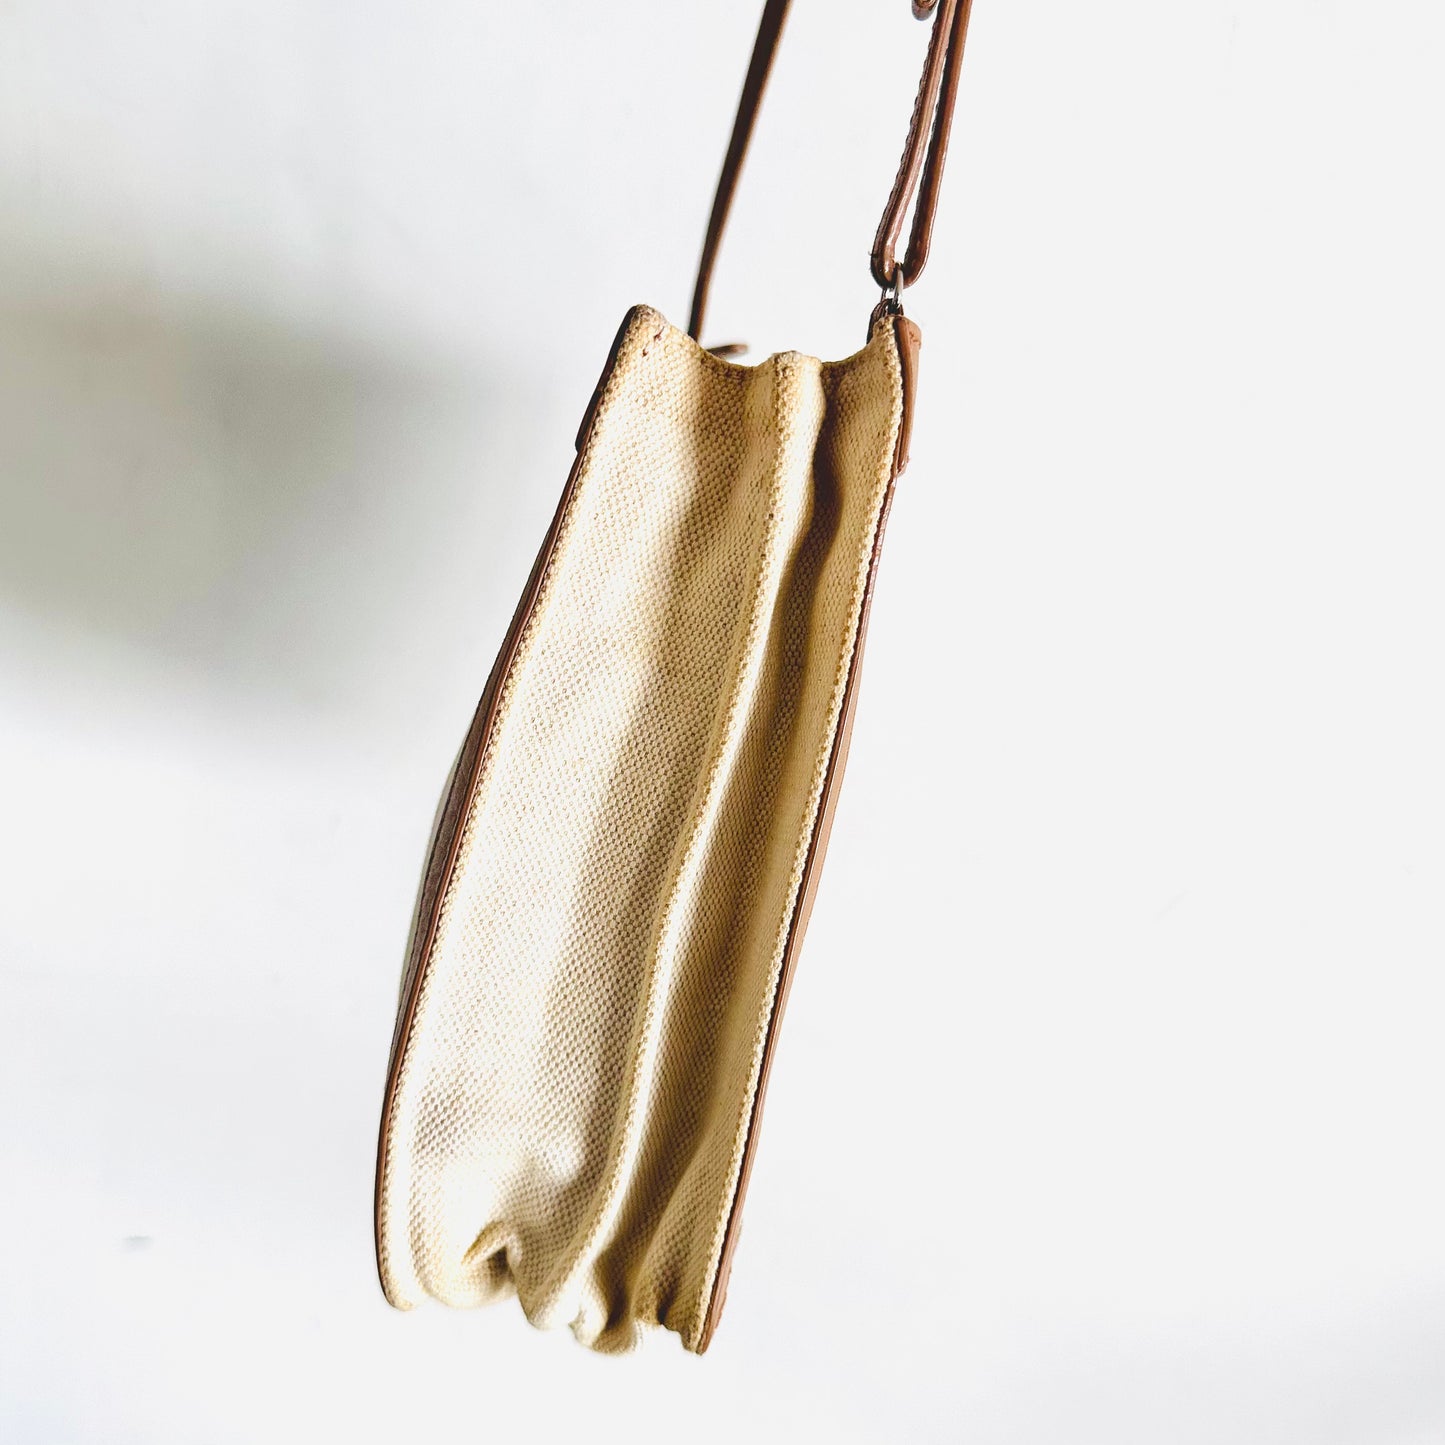 Balenciaga Cabas AJ Caramel Brown / White Logo  Small Pochette Clutch Shoulder Sling Bag